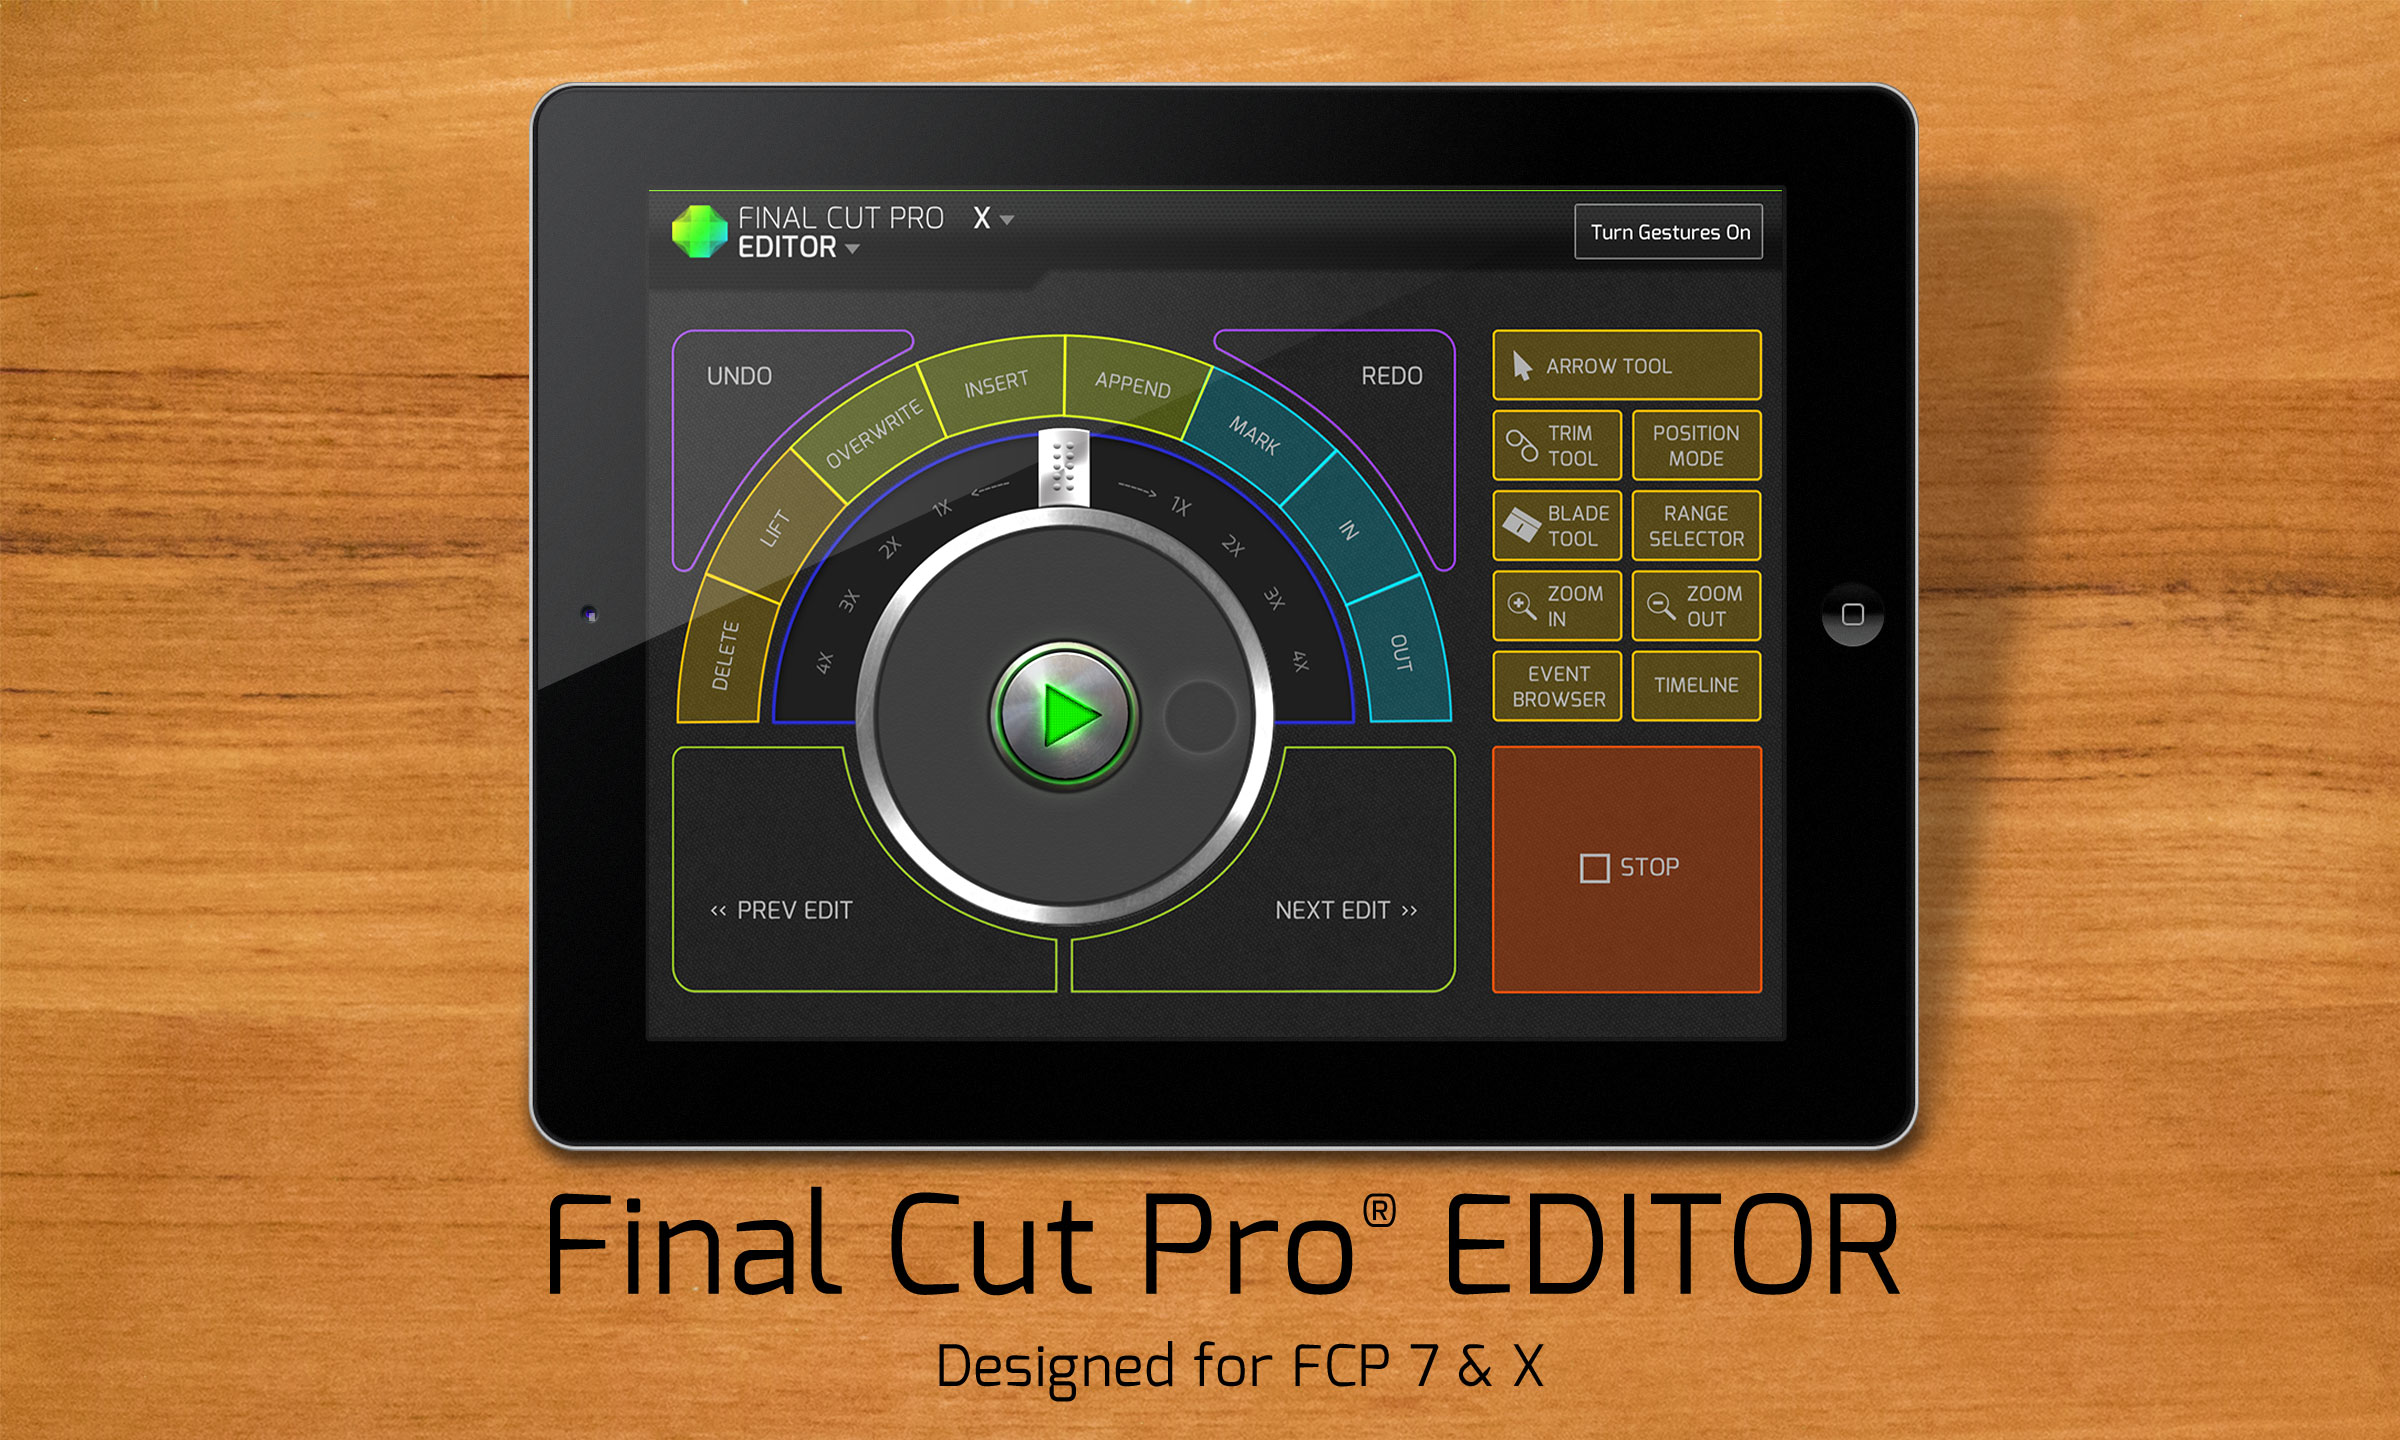 Console: Final Cut Pro EDITOR